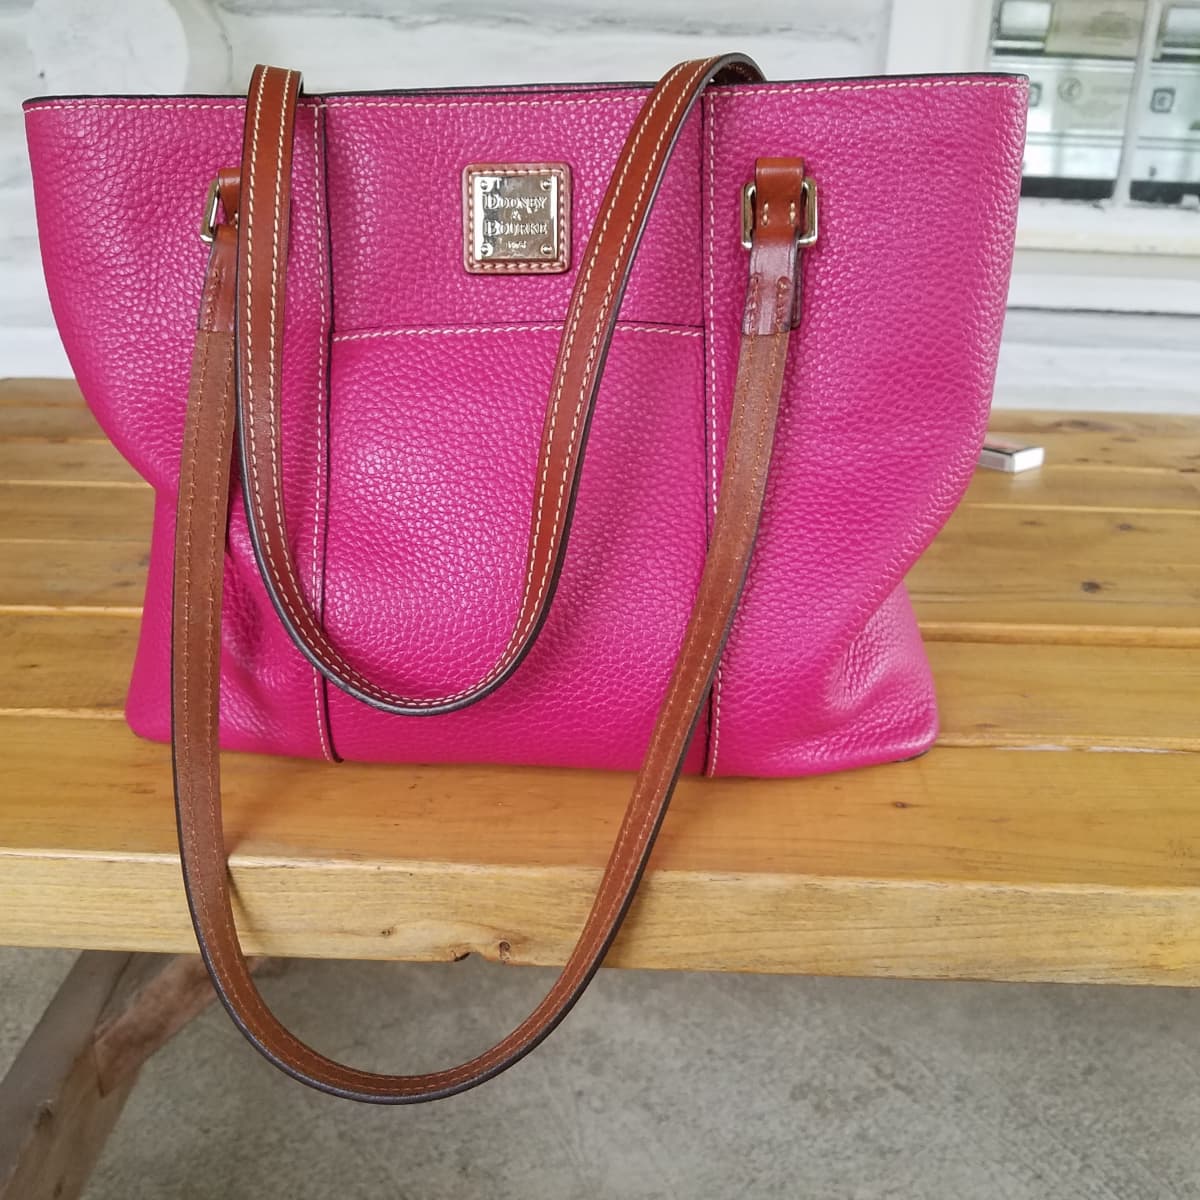 Amazon.com: PH PandaHall 2pcs Imitation Leather Bag Strap 24